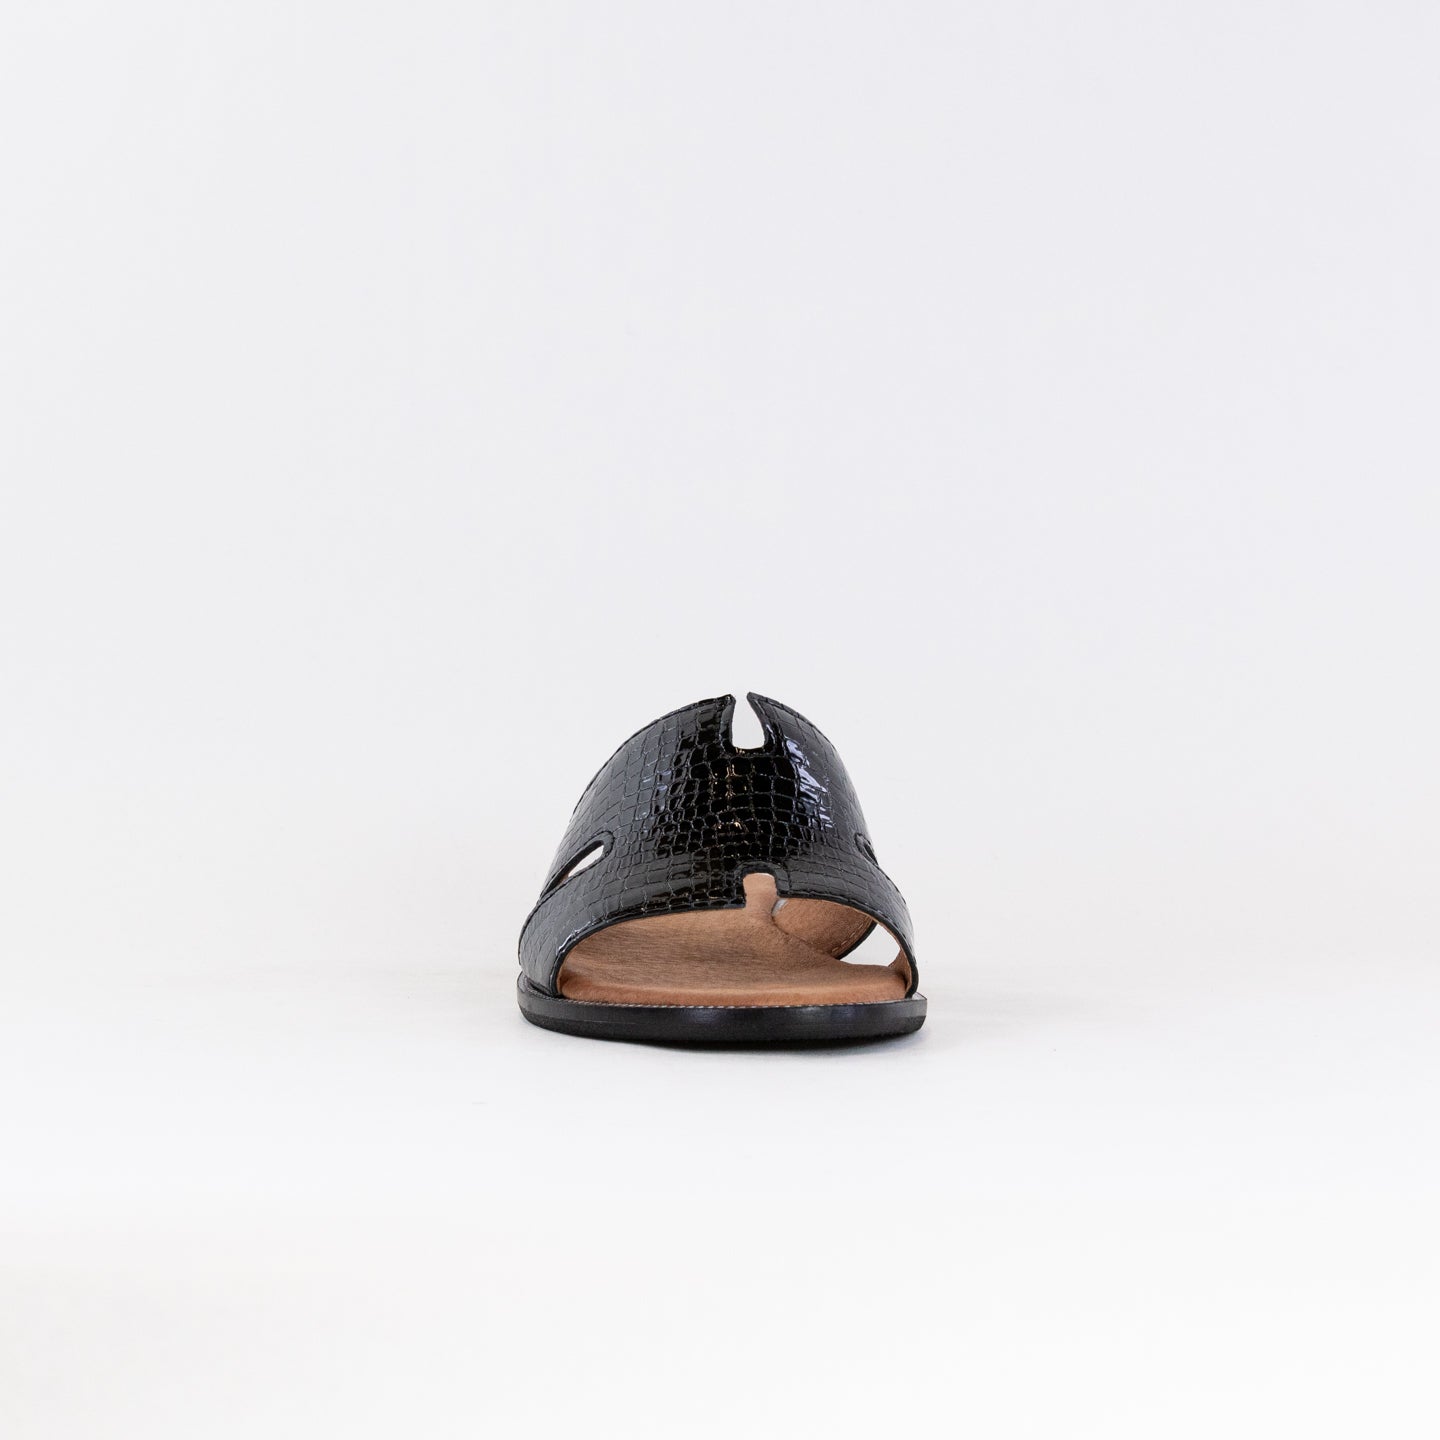 V-Italia 537 Sandal (Women's) - Czarny Black Patent